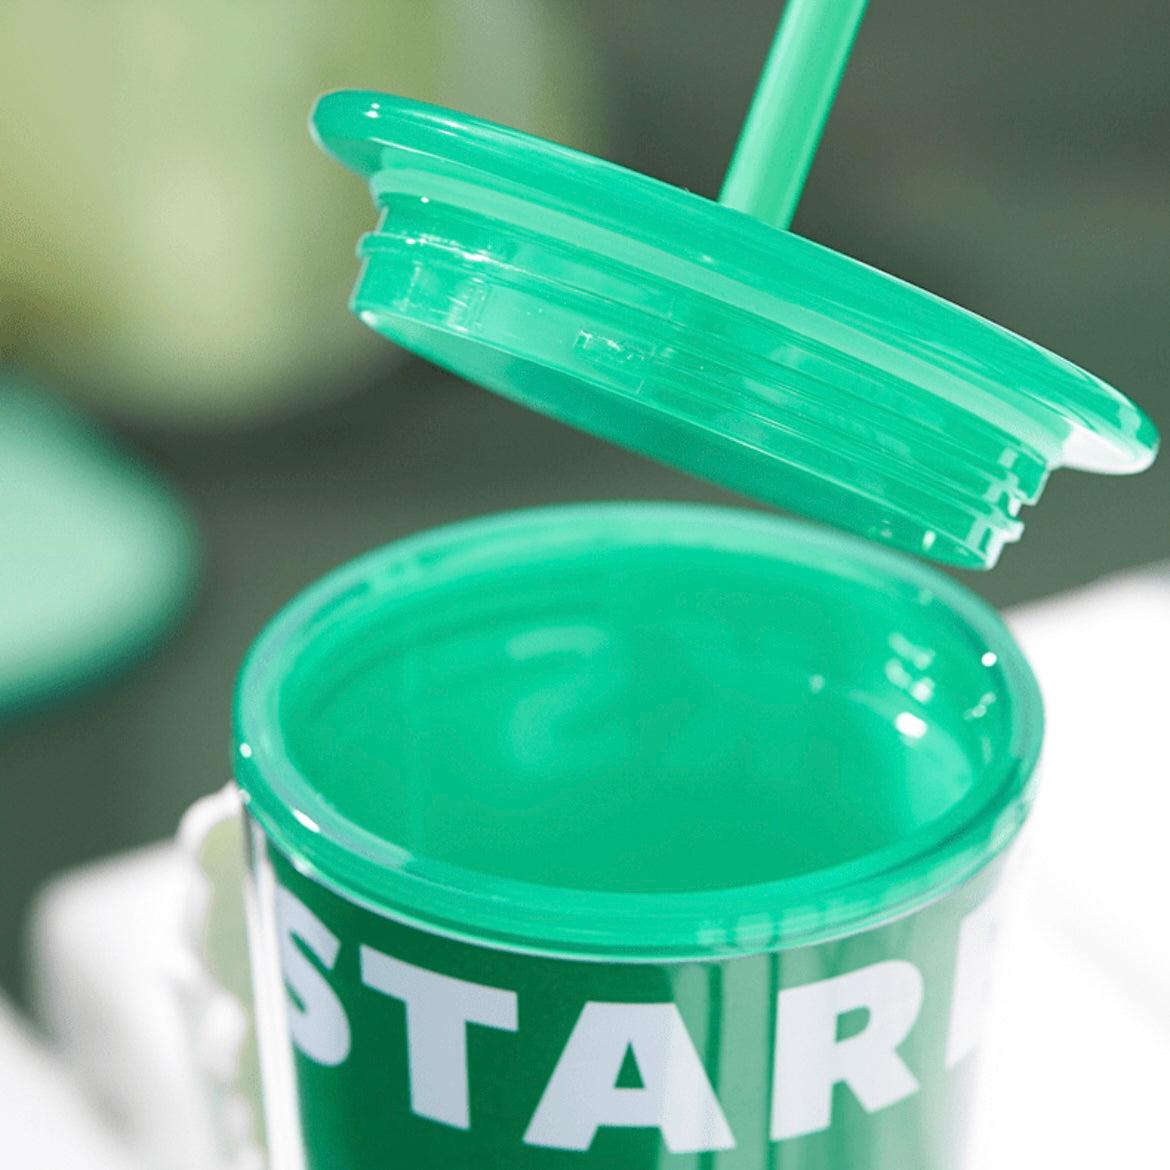 Starbucks 473ml/16oz Plastic Cold Cup with Bearista Bear Handle